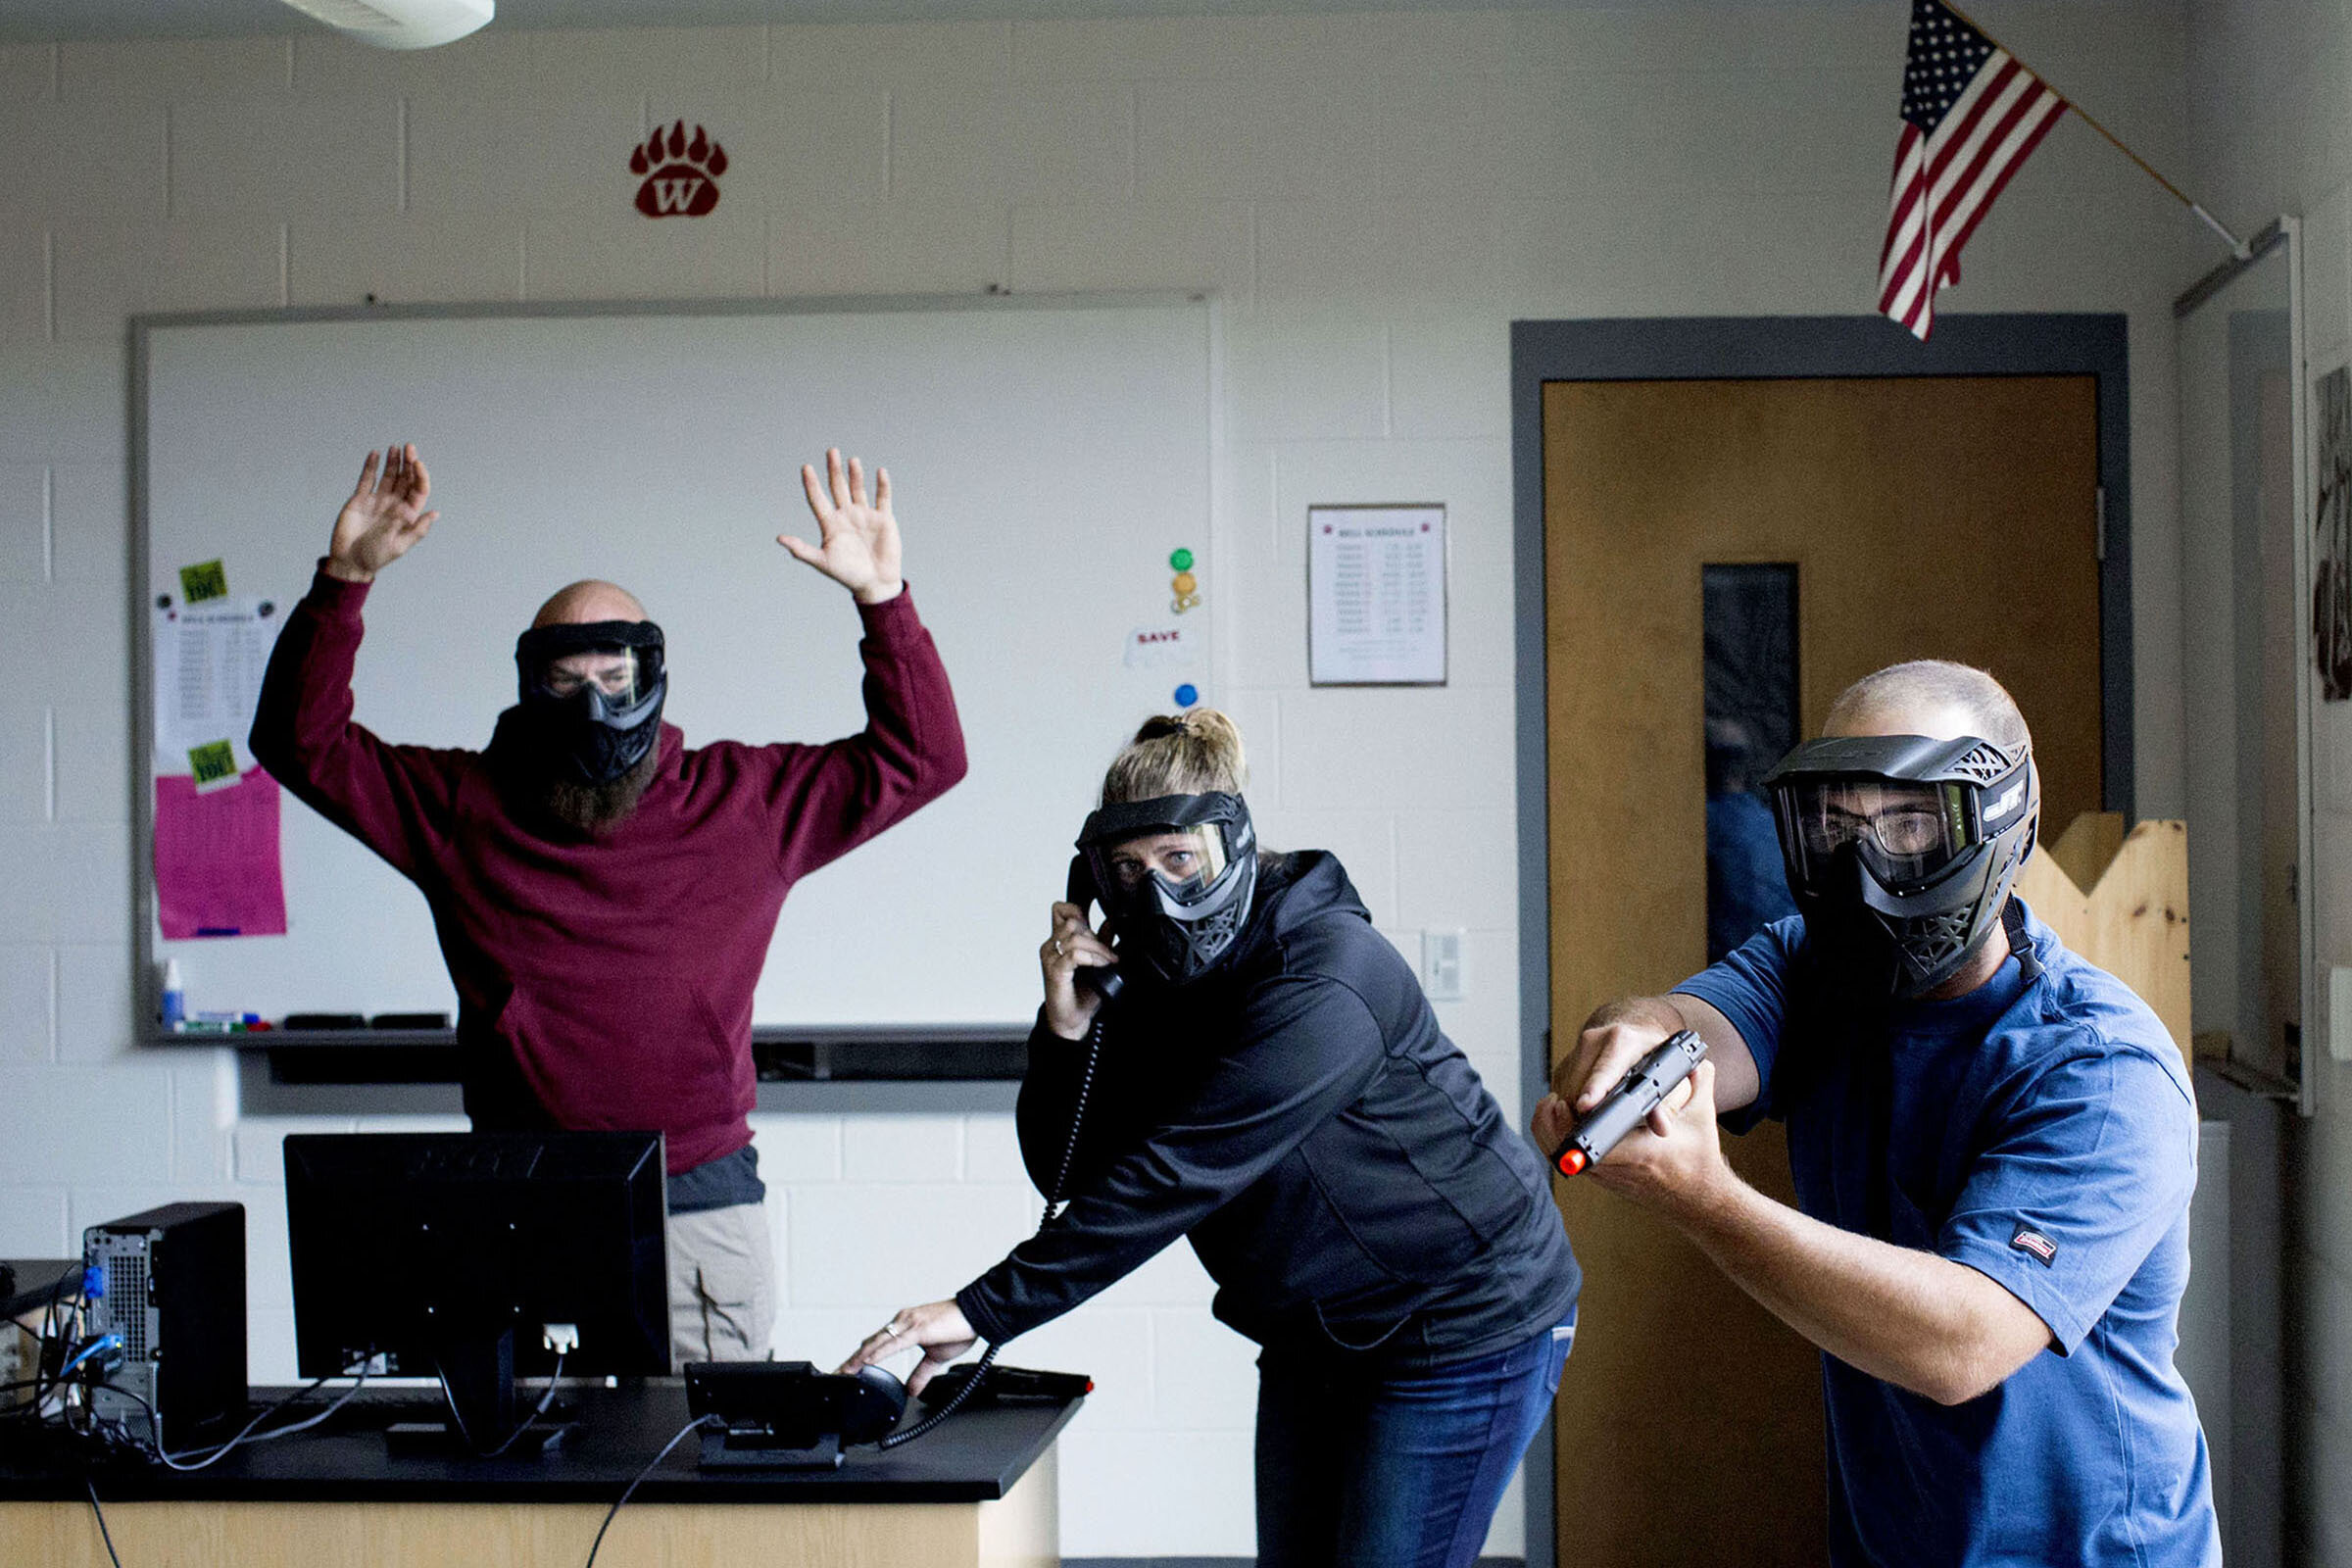 Ohio 2019 - Gun training for teachers.